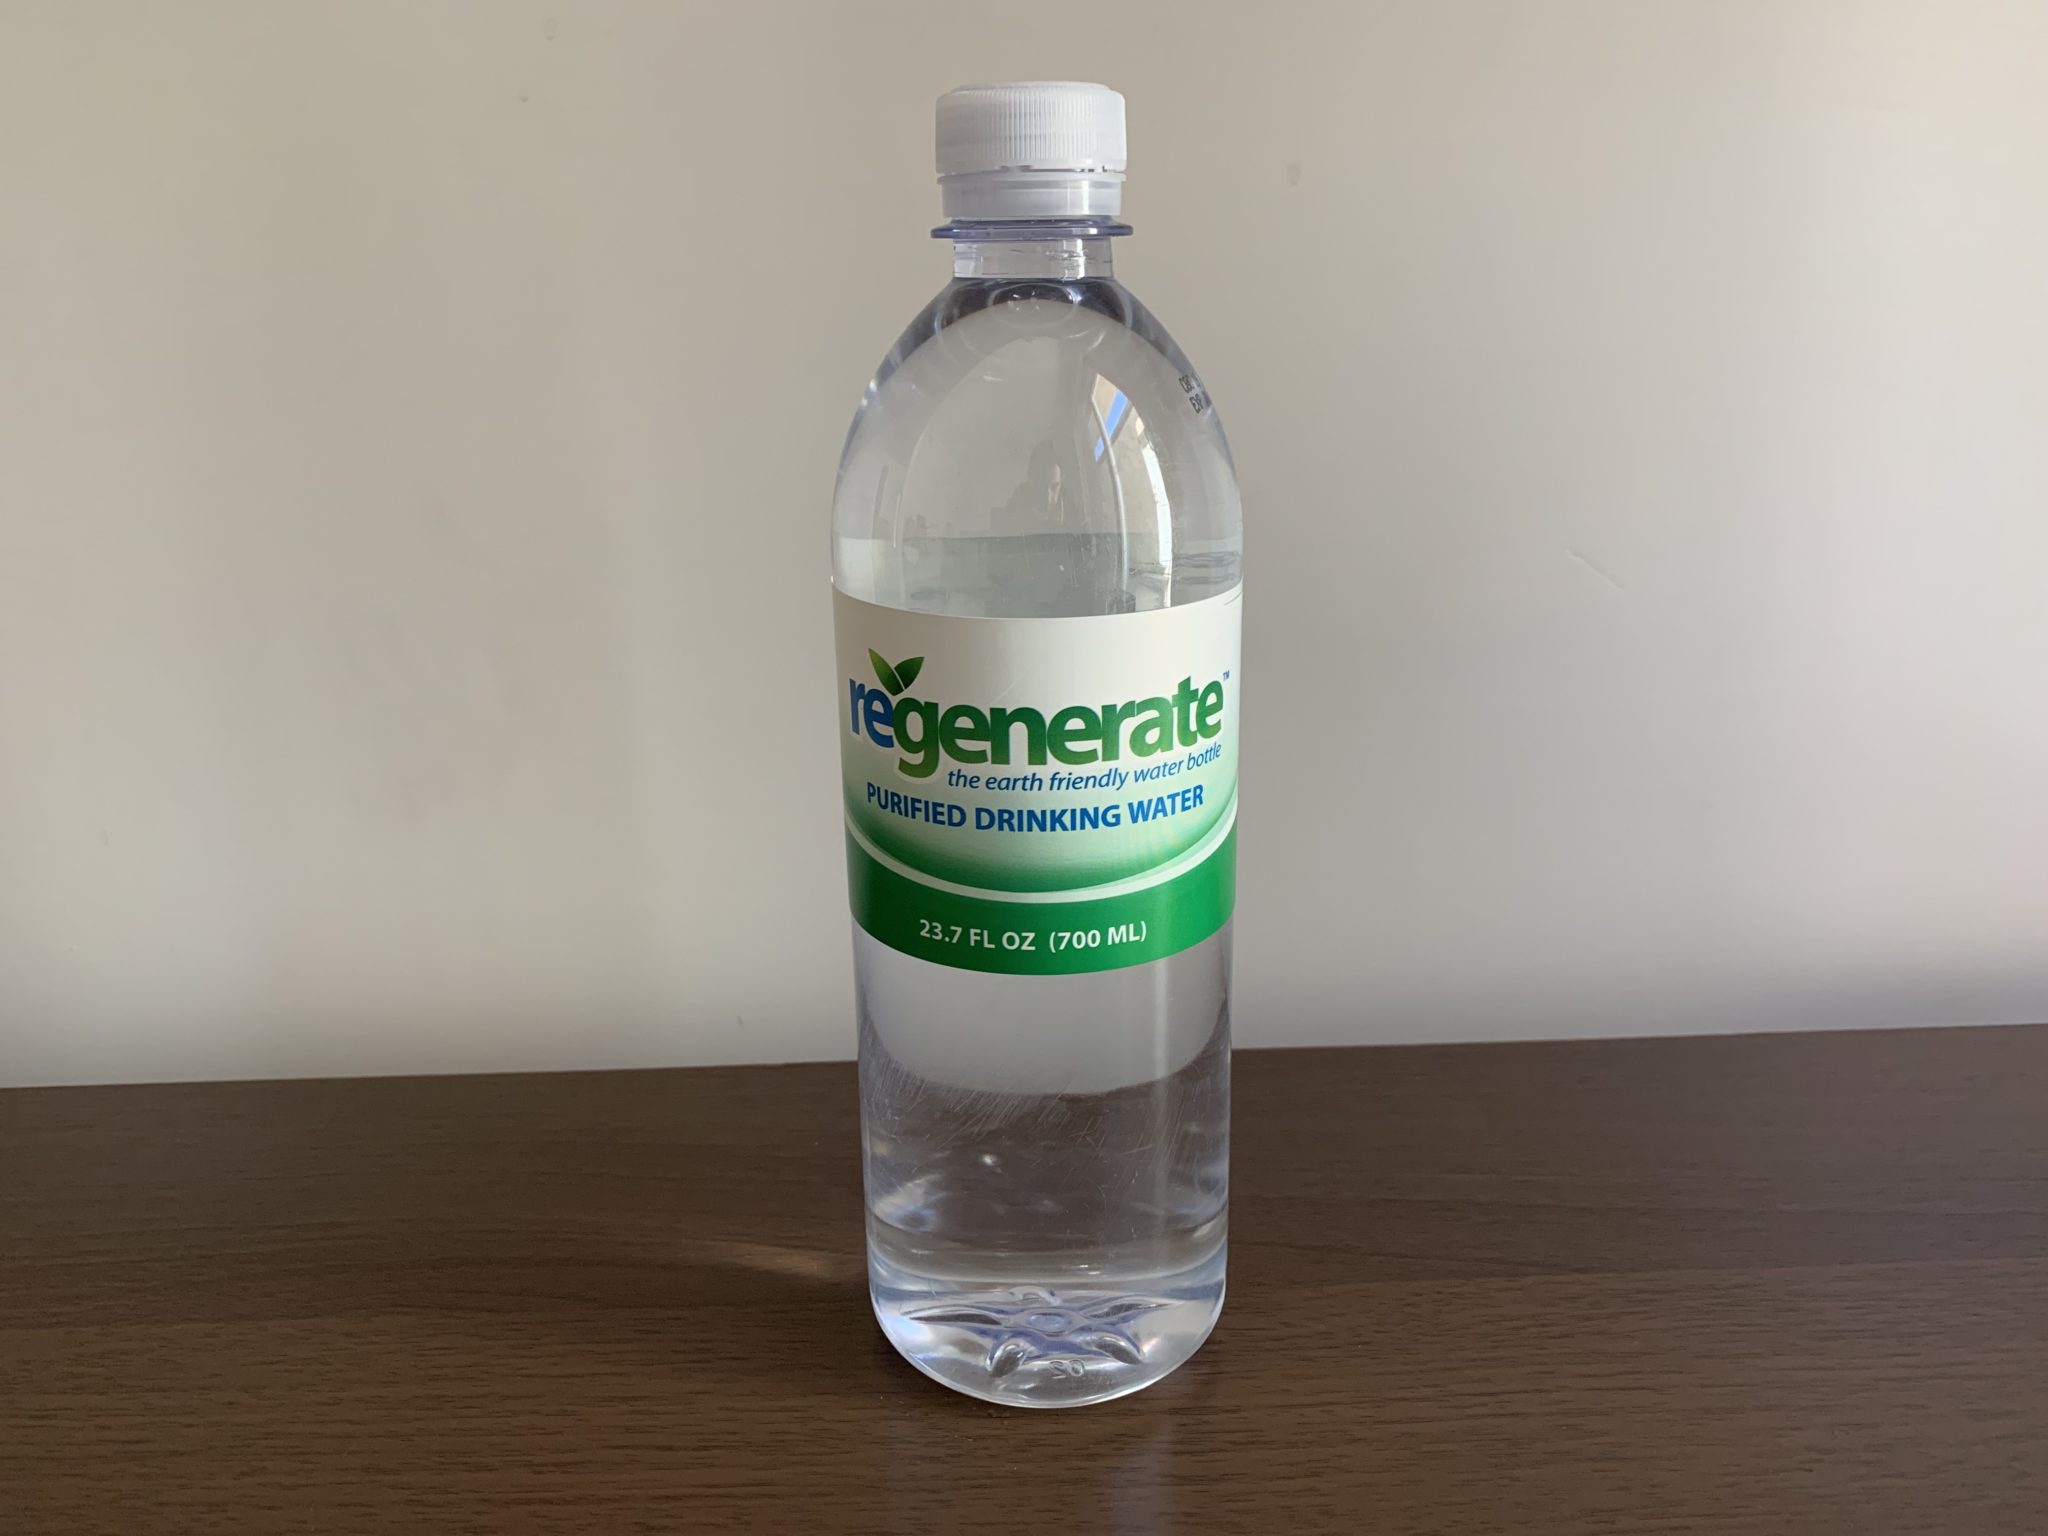 Regenerate Water Test Bottled Water Tests